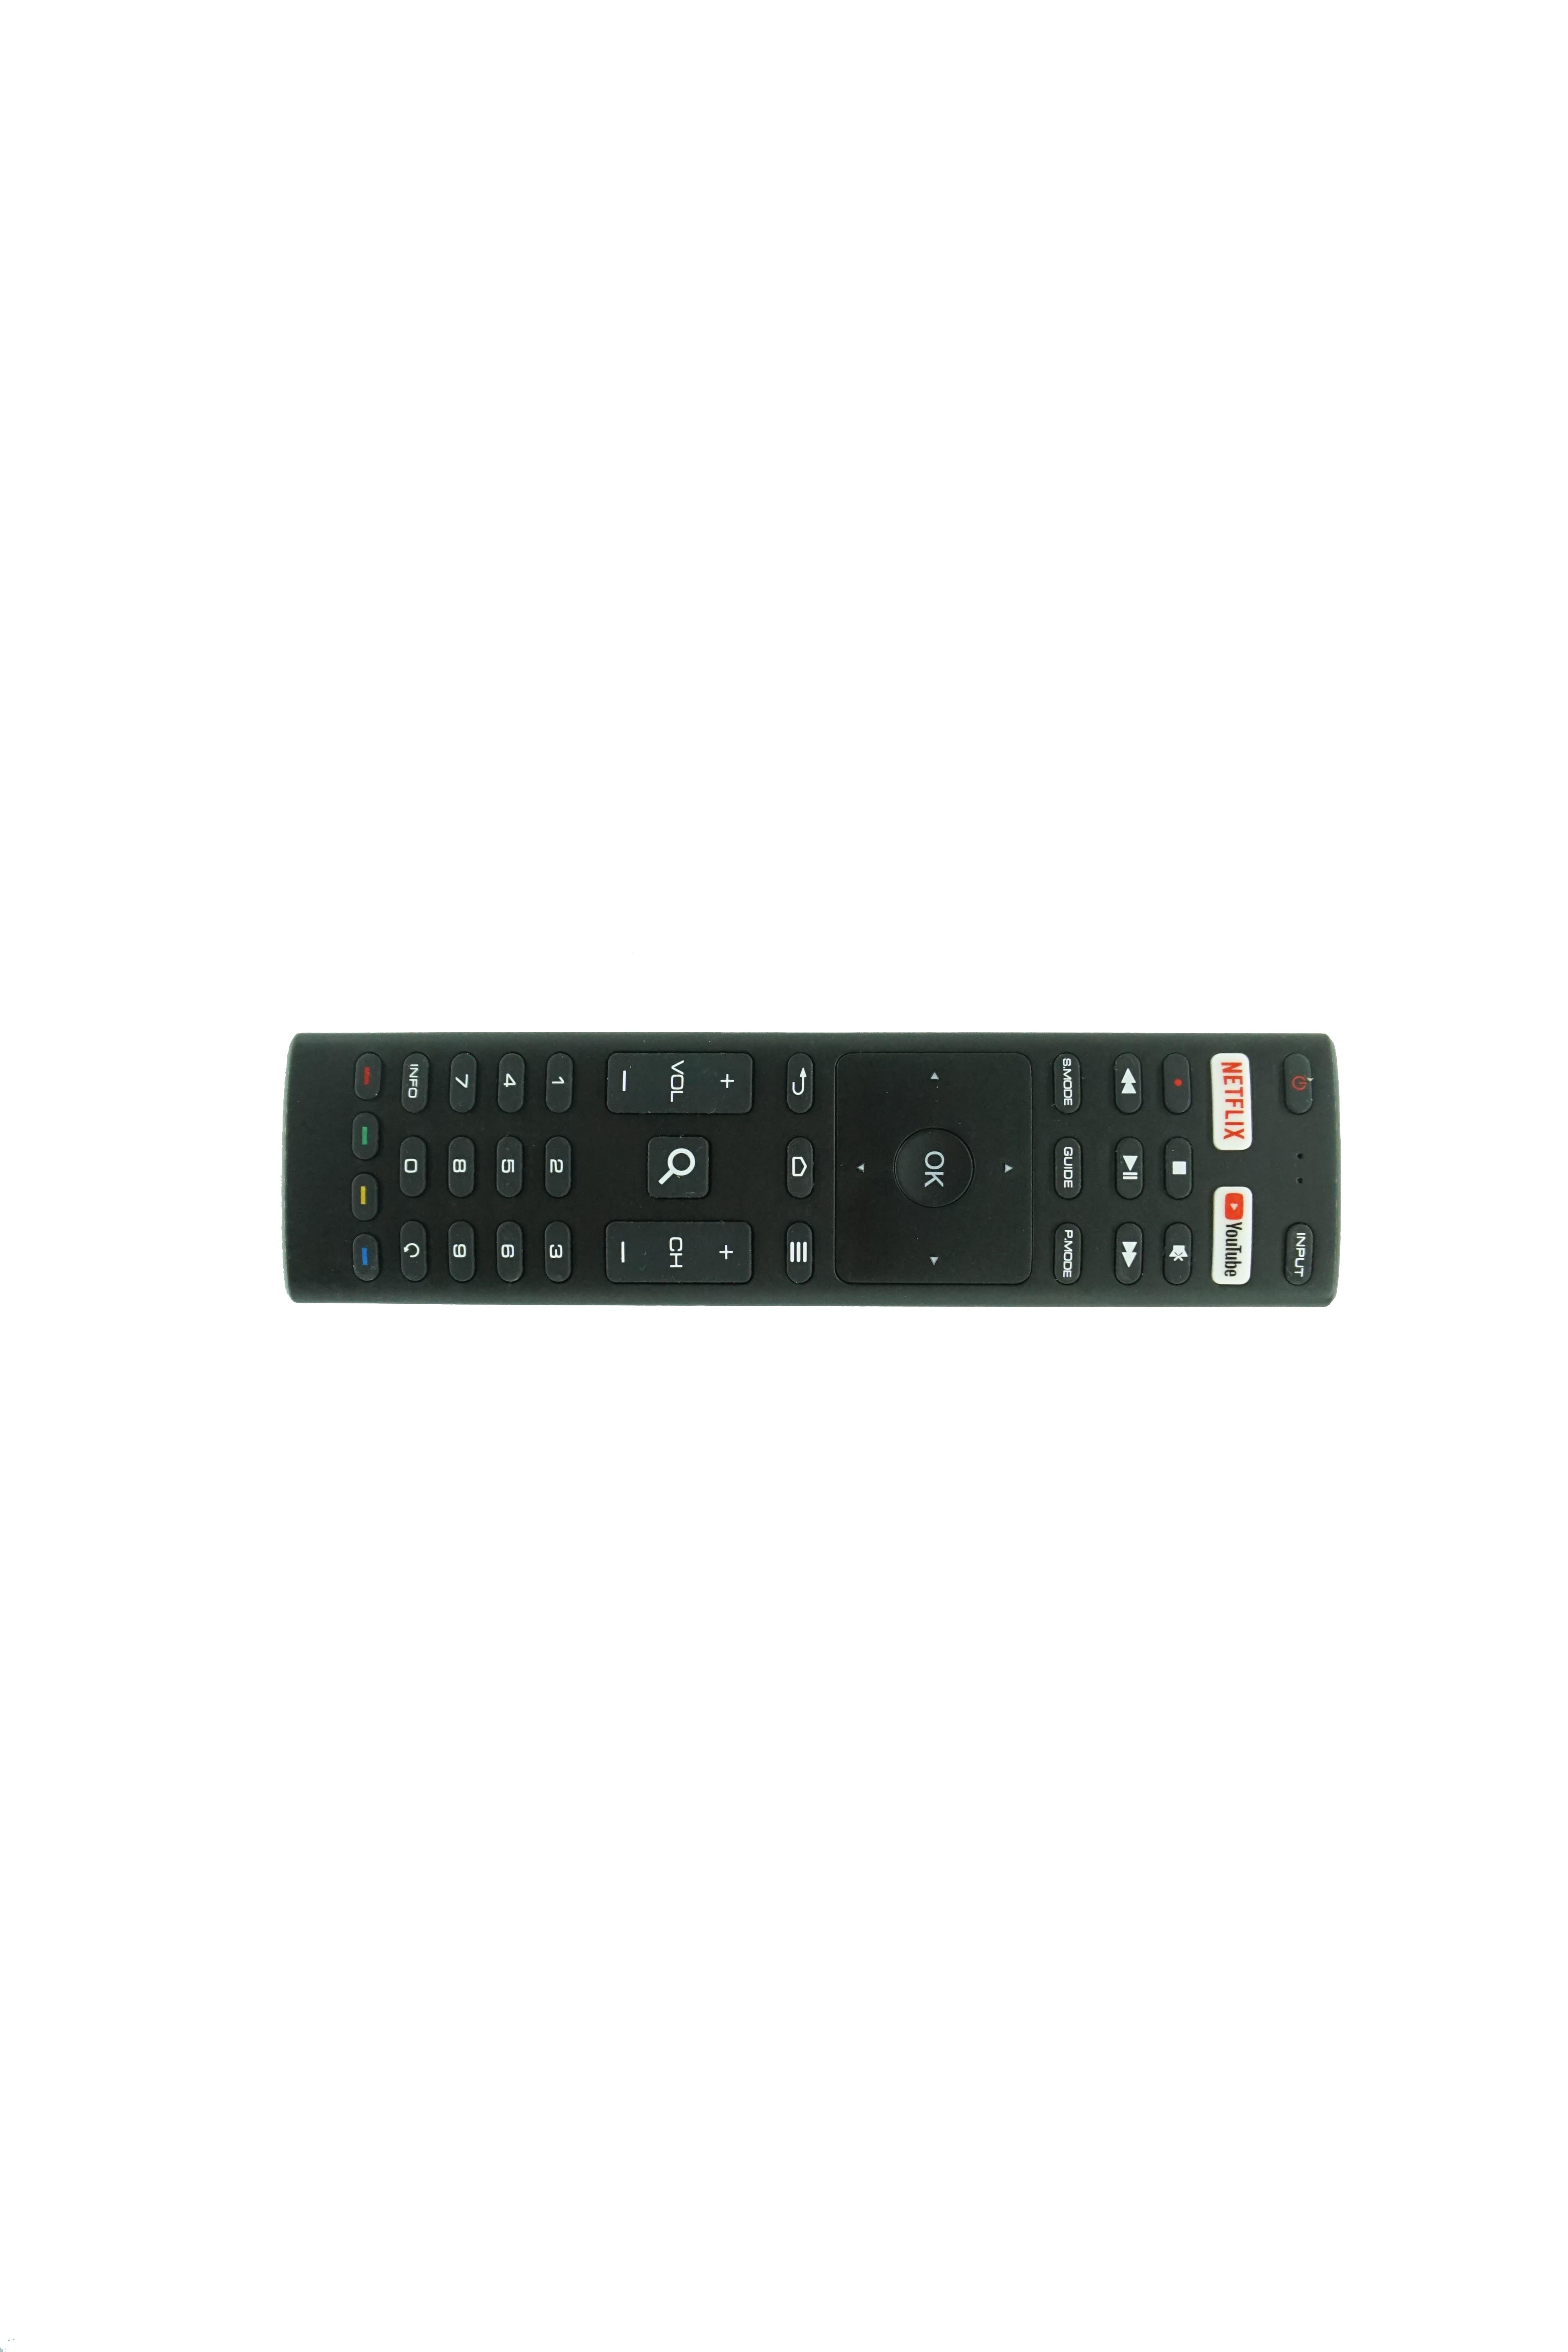 

Remote Control For RCA RTAQ5033 RTAU5004 RTAQ5033 Smart 4K UHD LED LCD HDTV android TV